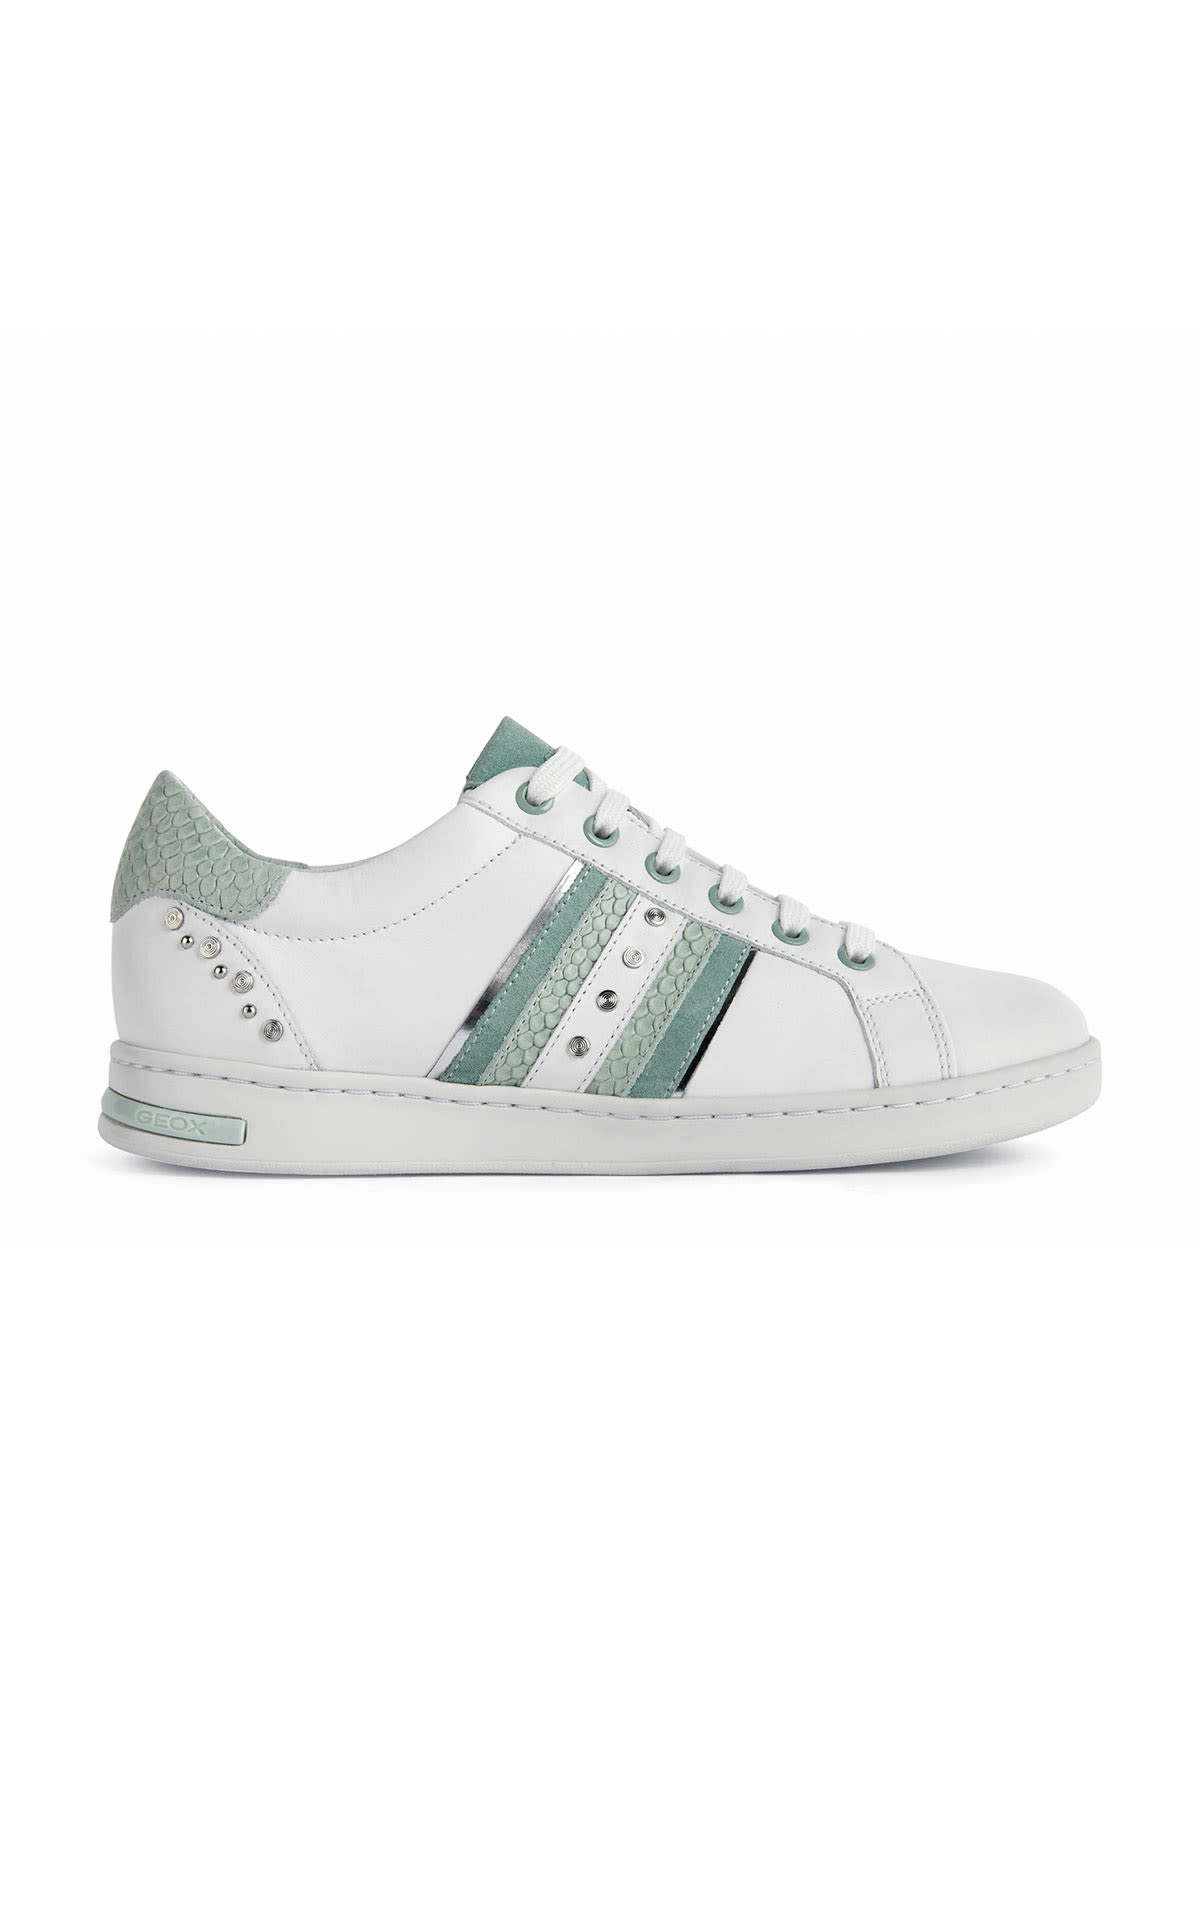 Sneaker blanca con detalles verdes geox